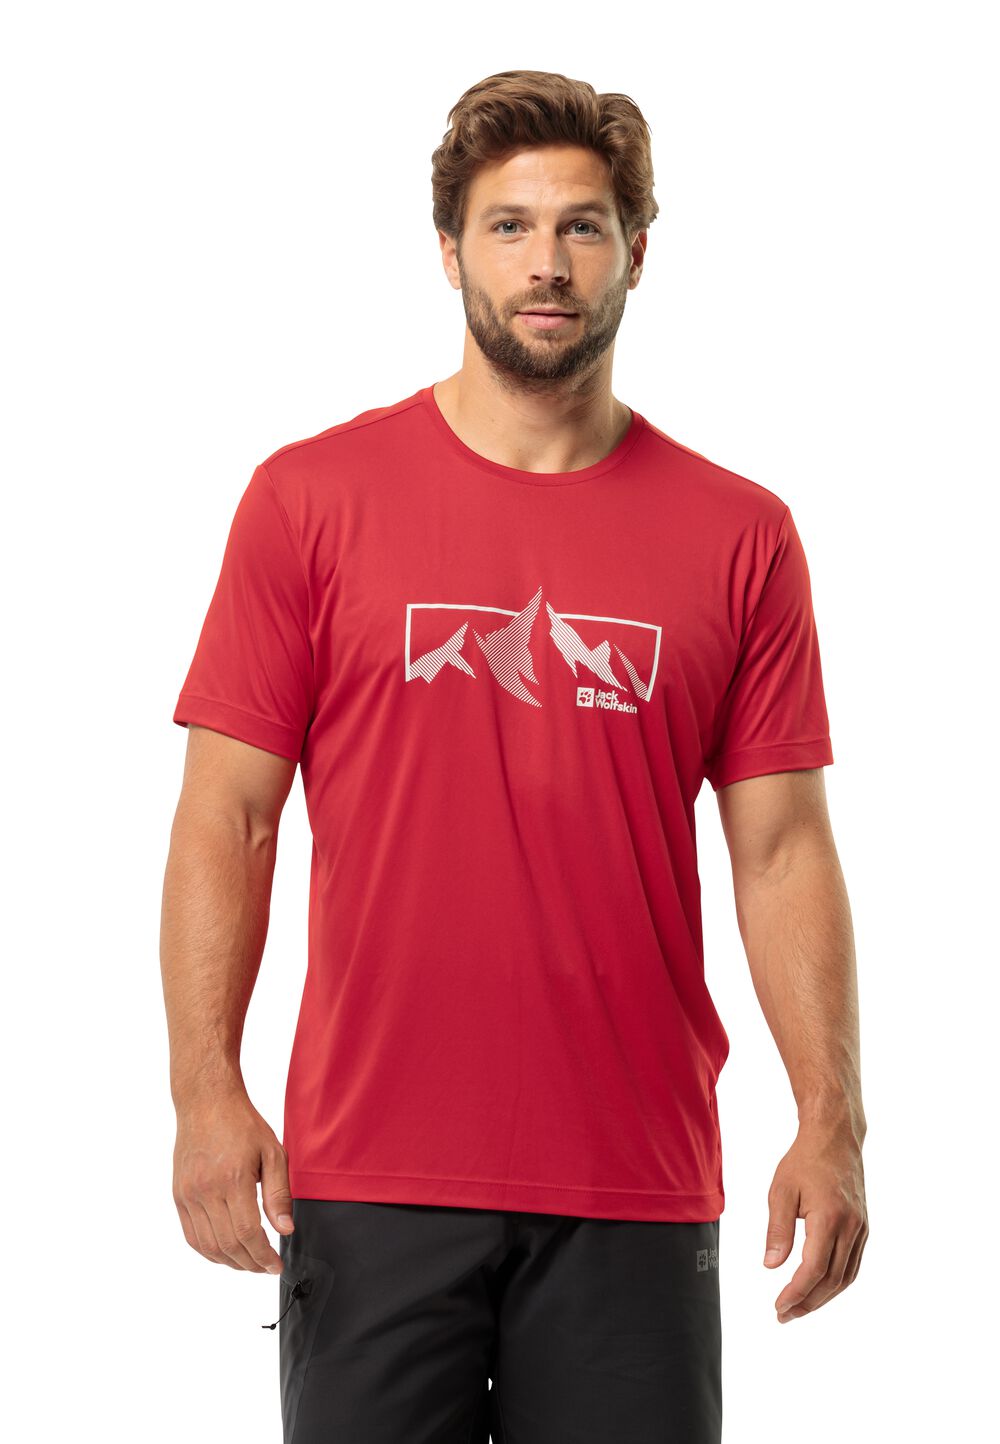 Jack Wolfskin Peak Graphic T-Shirt Men Functioneel shirt Heren M rood red glow